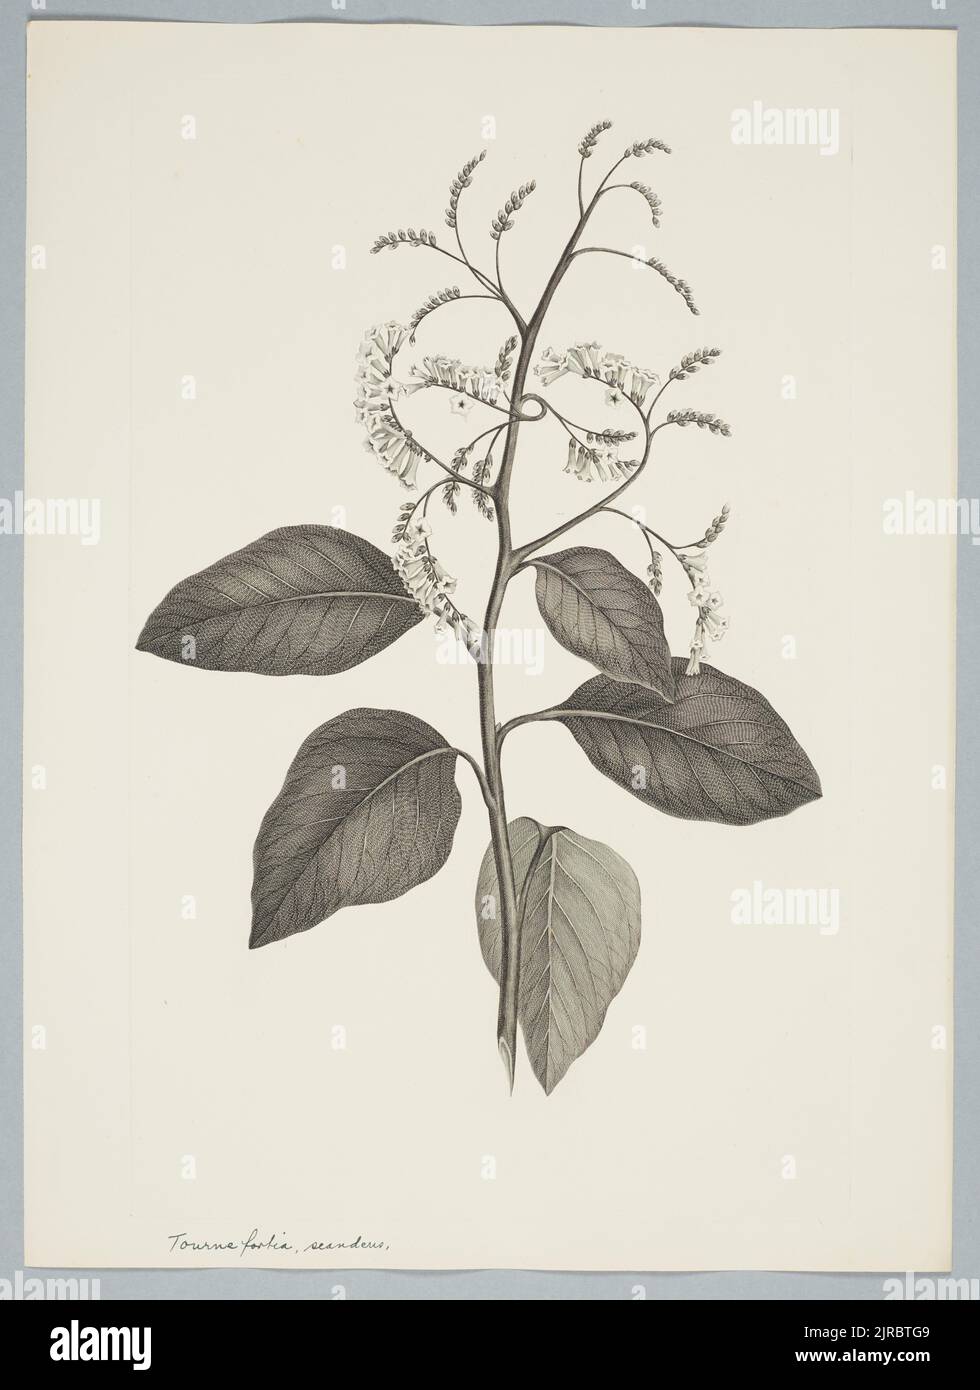 Tournefortia sarmentosa Lamarck, by Sydney Parkinson. Gift of the British Museum, 1895. Stock Photo